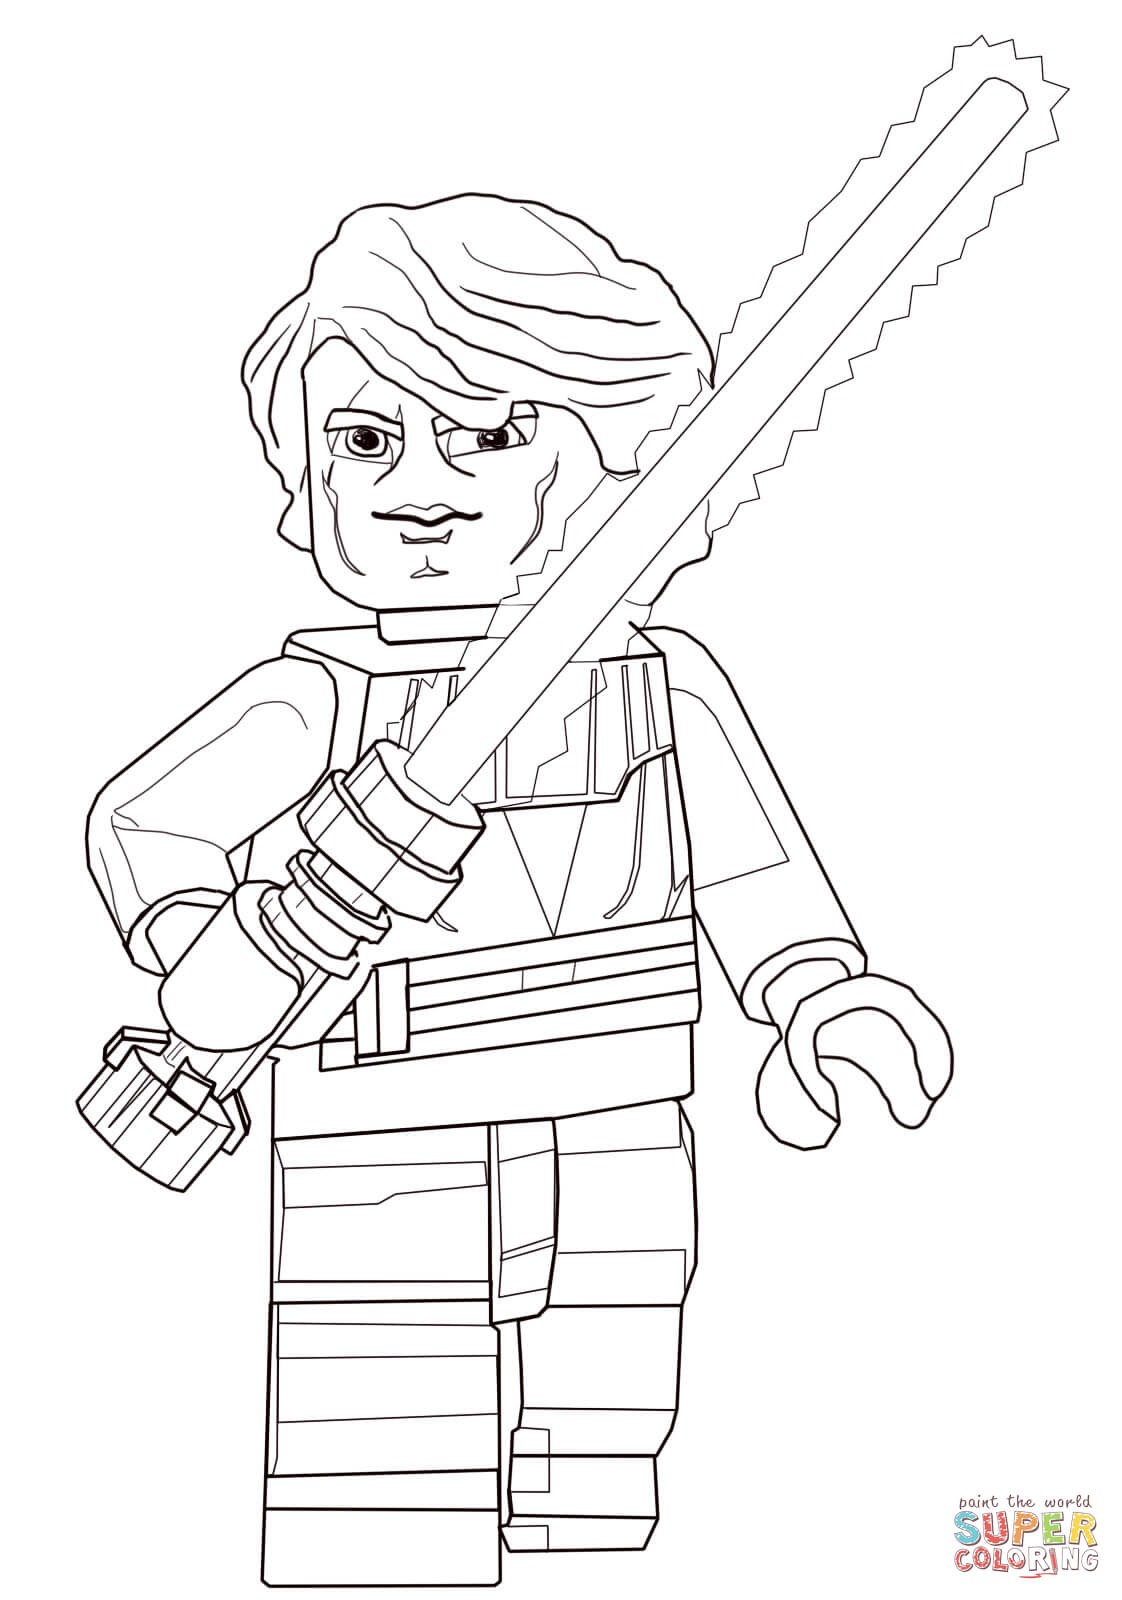 Lego Star Wars Anakin Skywalker coloring page